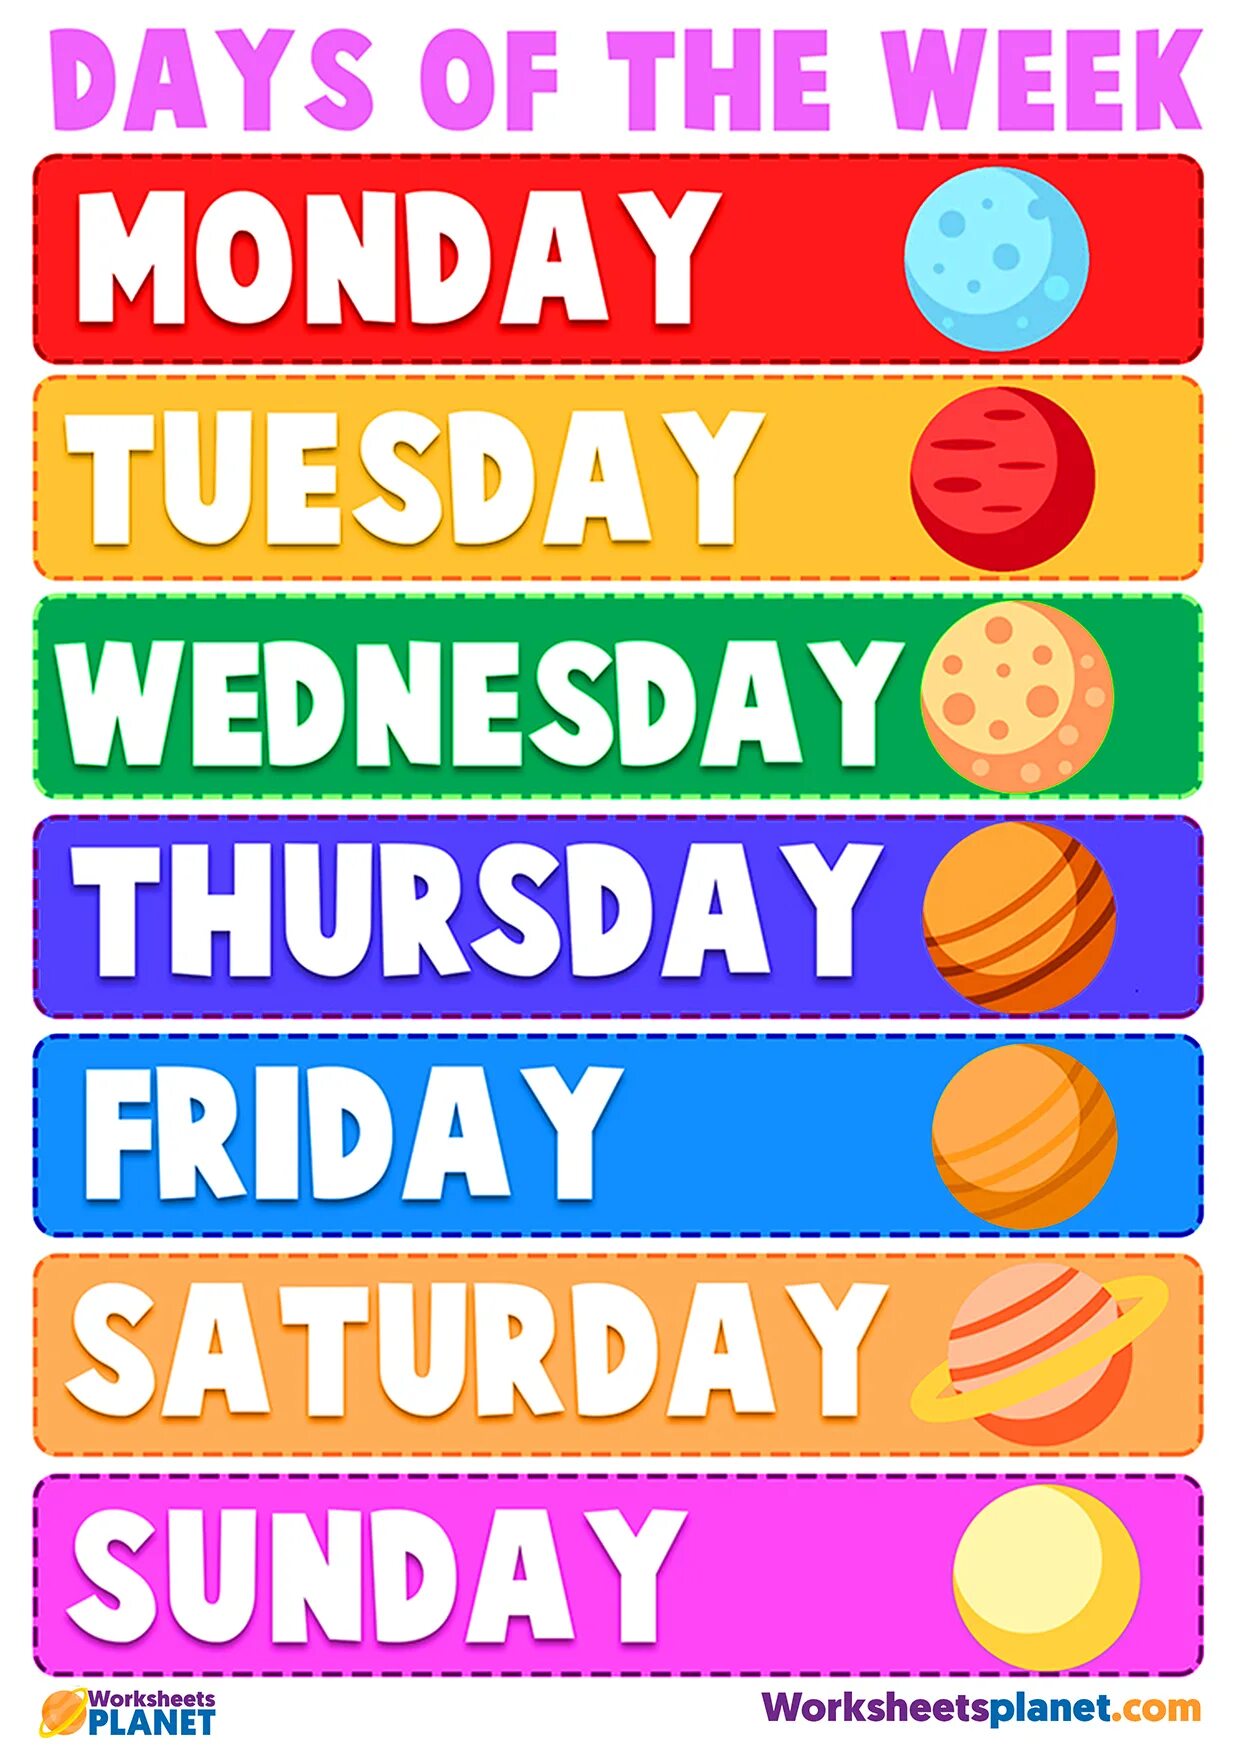 Days of the week. Days of the week плакат. Week Days name. Days of the week Tuesday. Понедельник на английском на часах